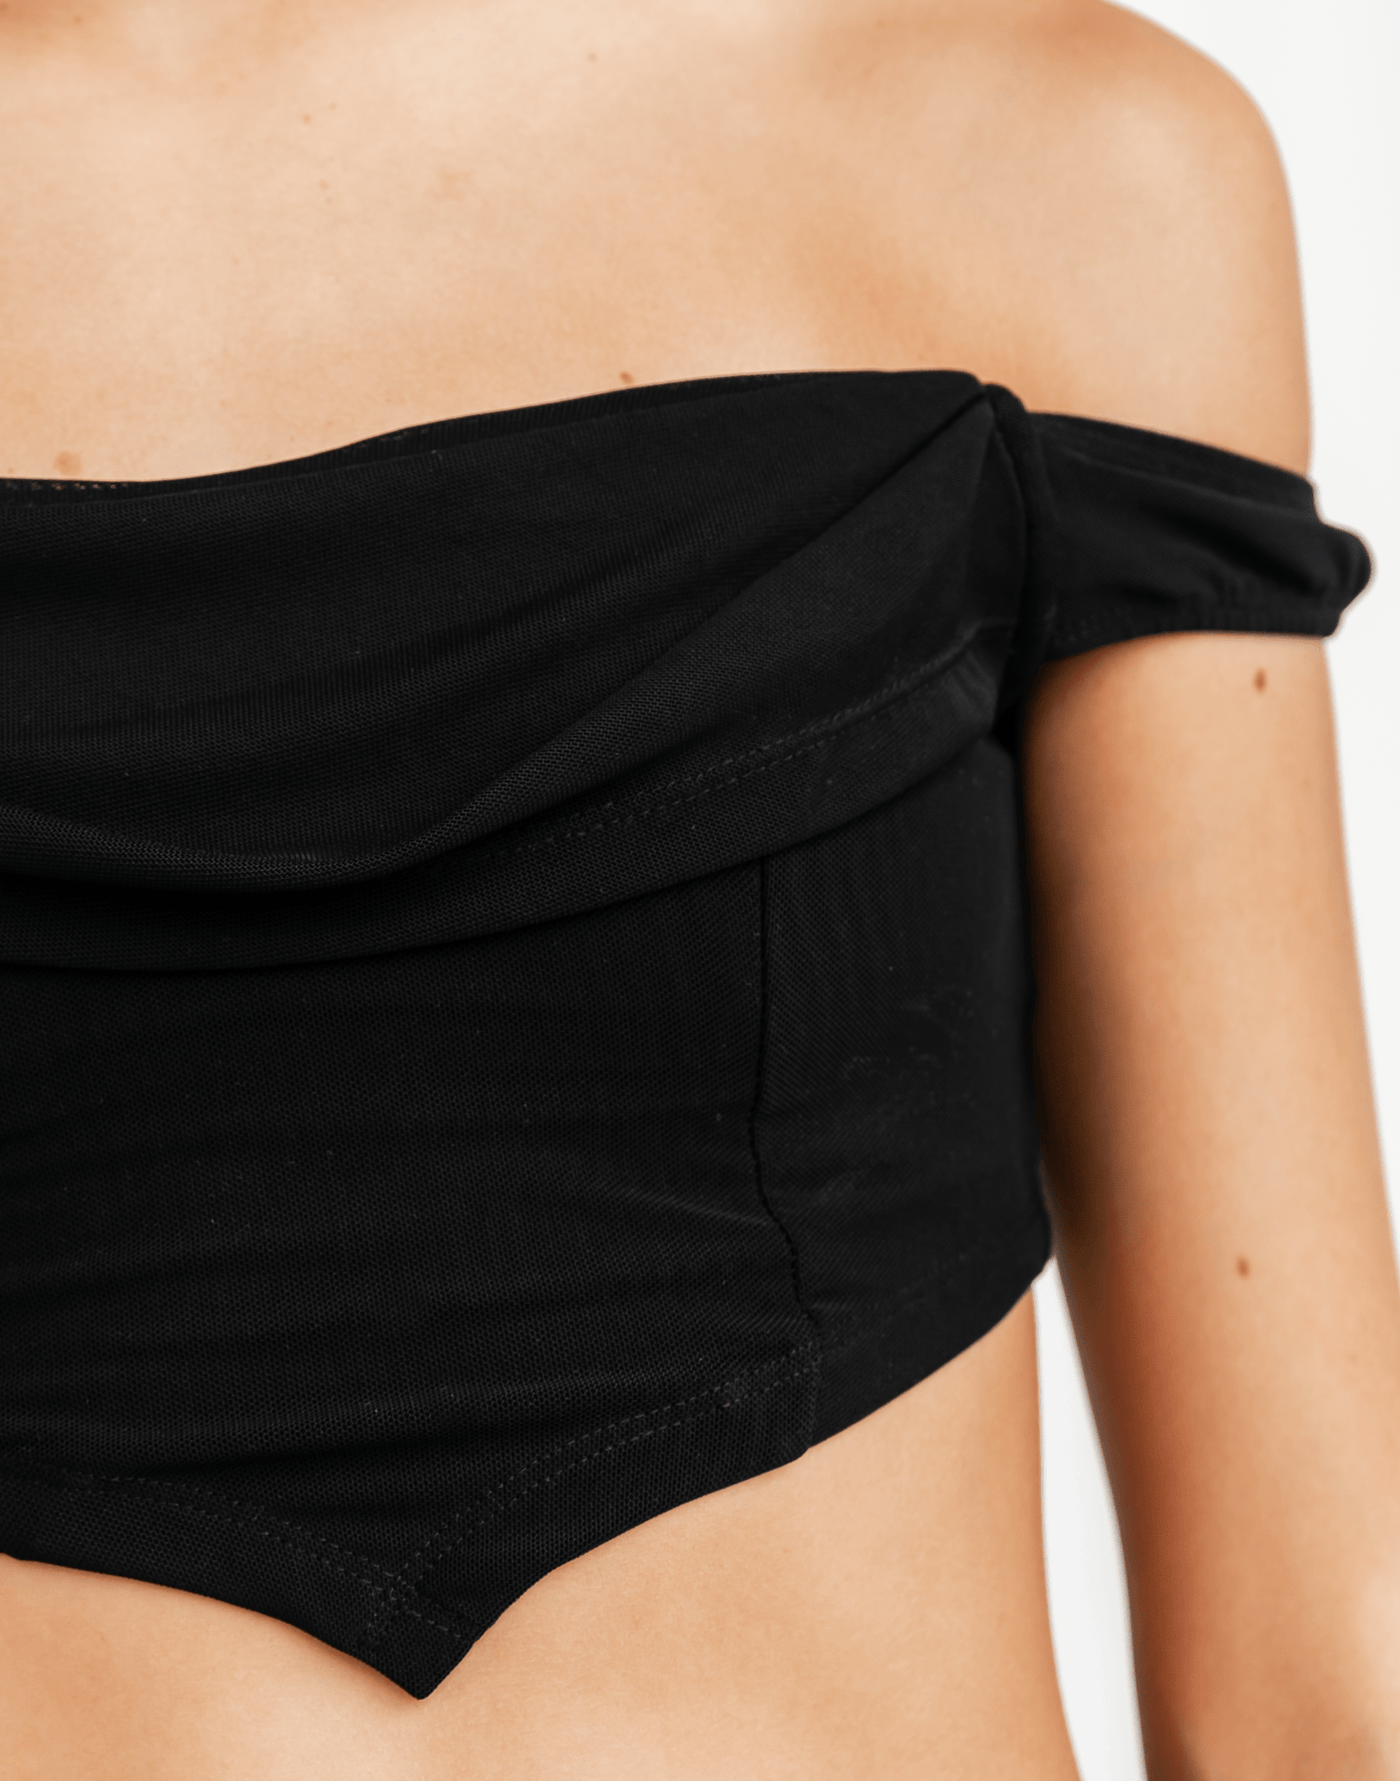 Mikki Crop Top (Black) - Black Strapless Crop Top - Women's Top - Charcoal Clothing